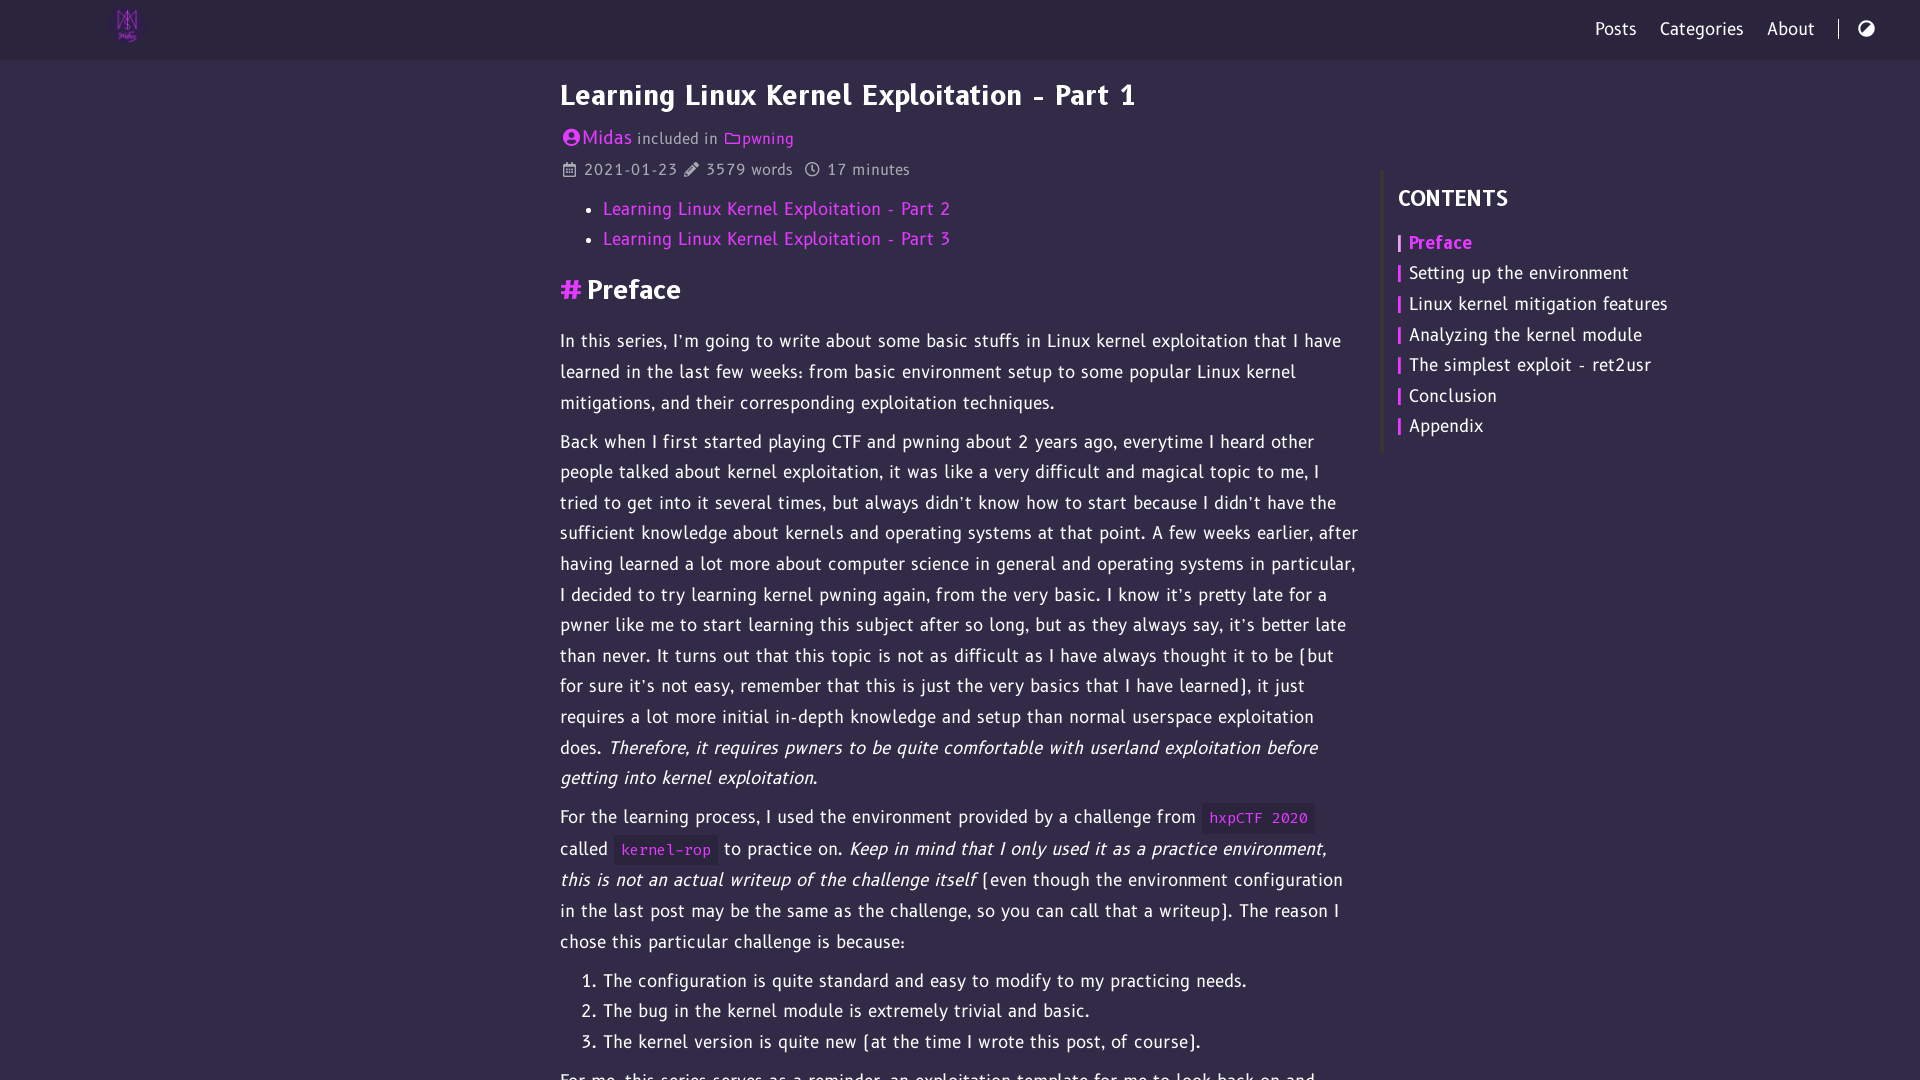 Learning Linux Kernel Exploitation - Part 1 - Midas Blog